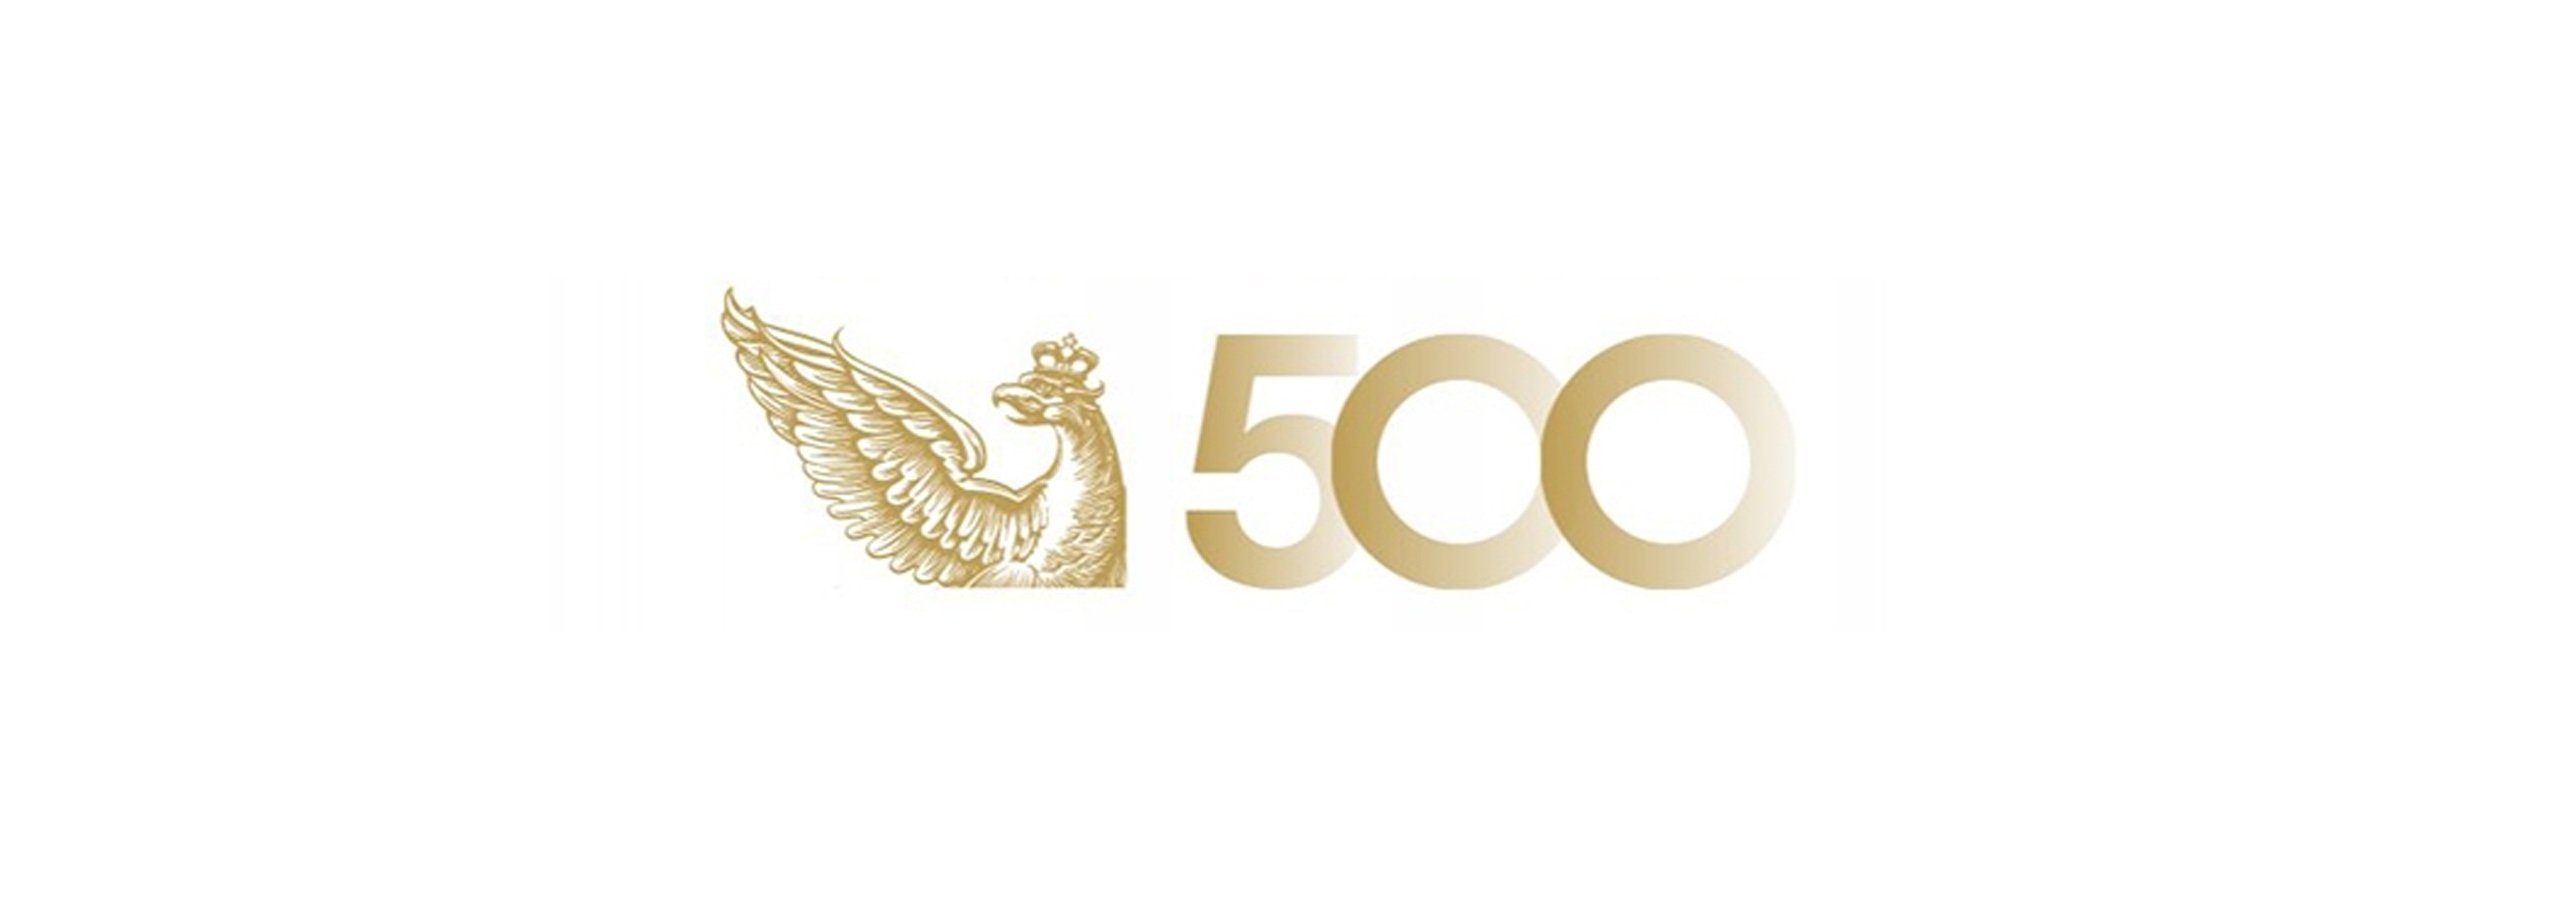 Drutex yet again advances in the ‘500 List’ ranking by Rzeczpospolita daily.